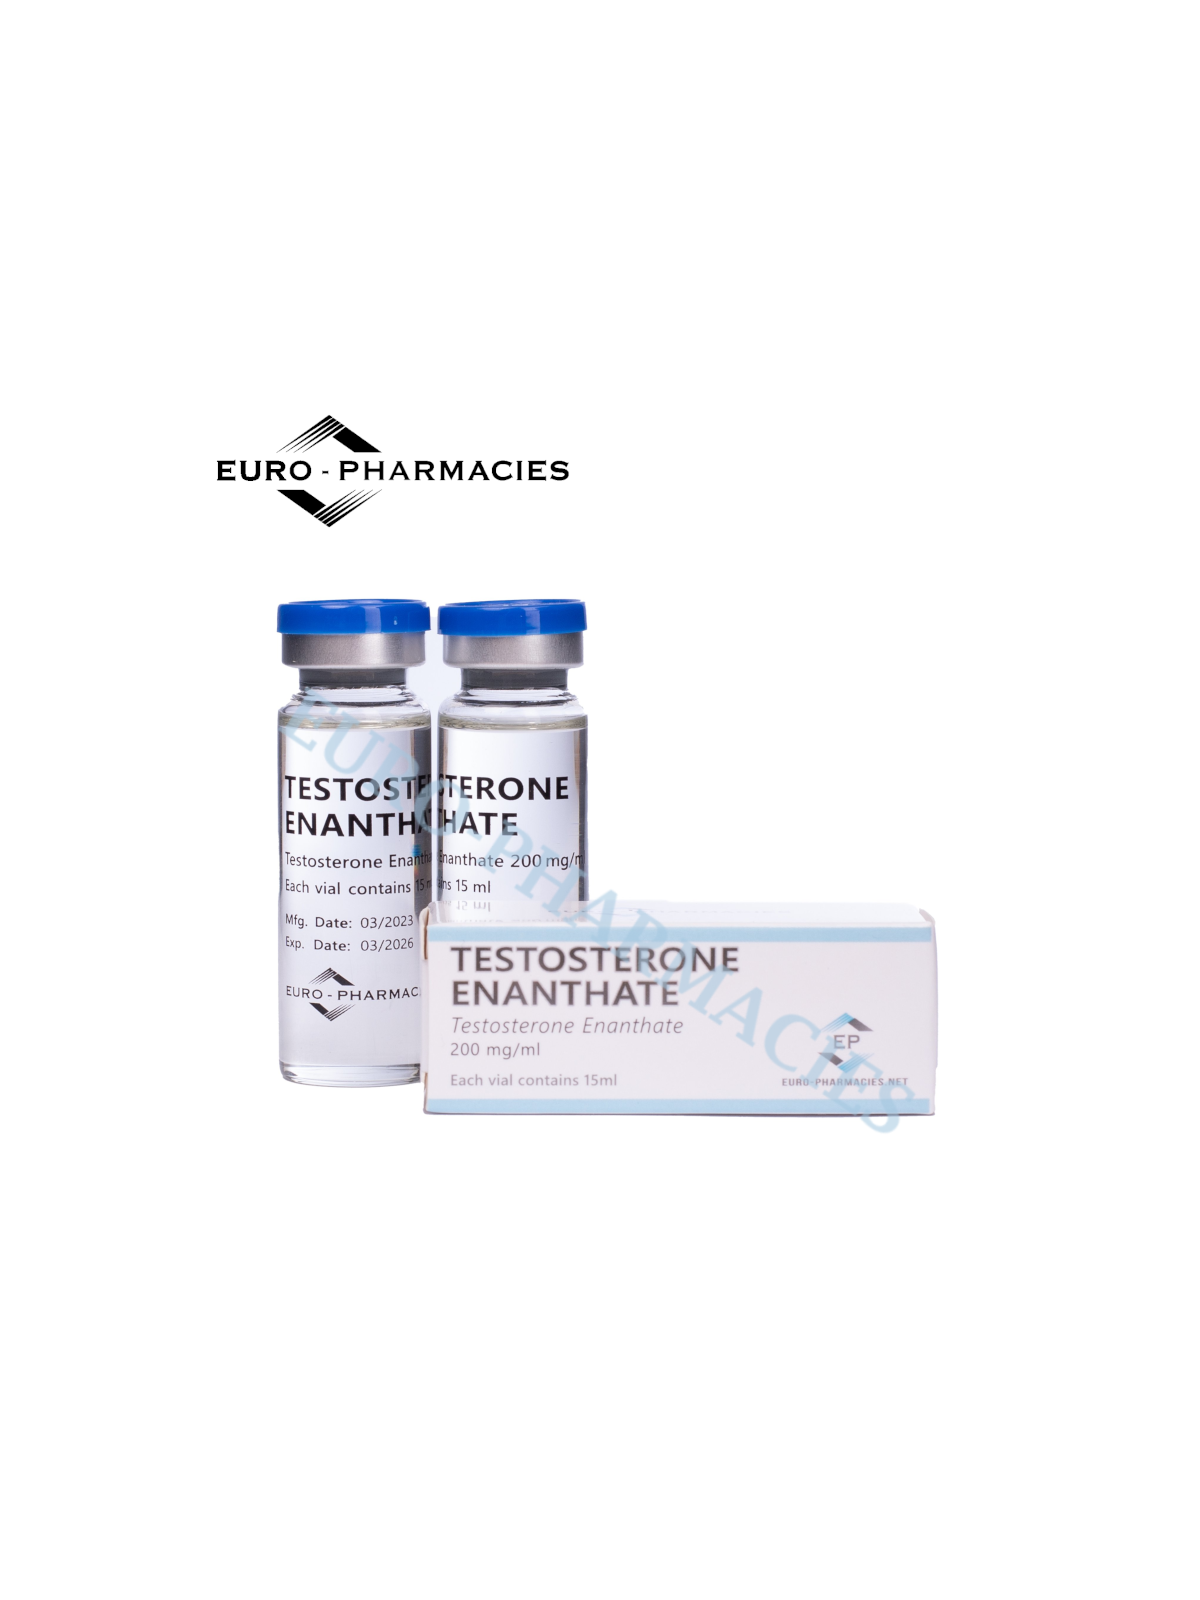 Testosterone Enanthate - 200mg/ml, 15ml/vial - Euro-Pharmacies - NEW